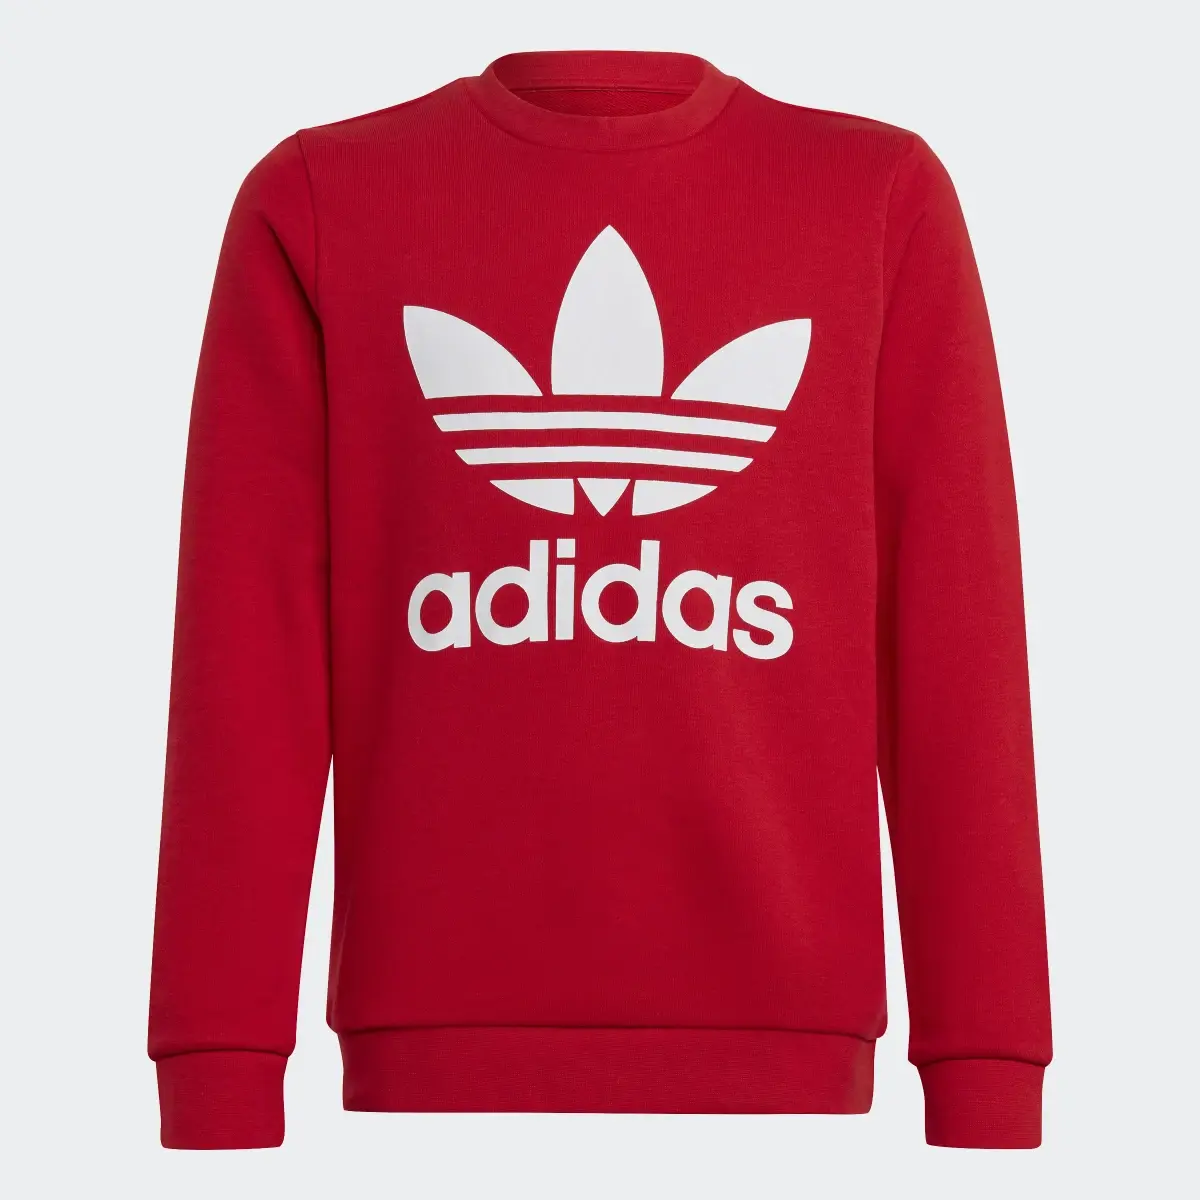 Adidas Trefoil Crew Sweatshirt. 3